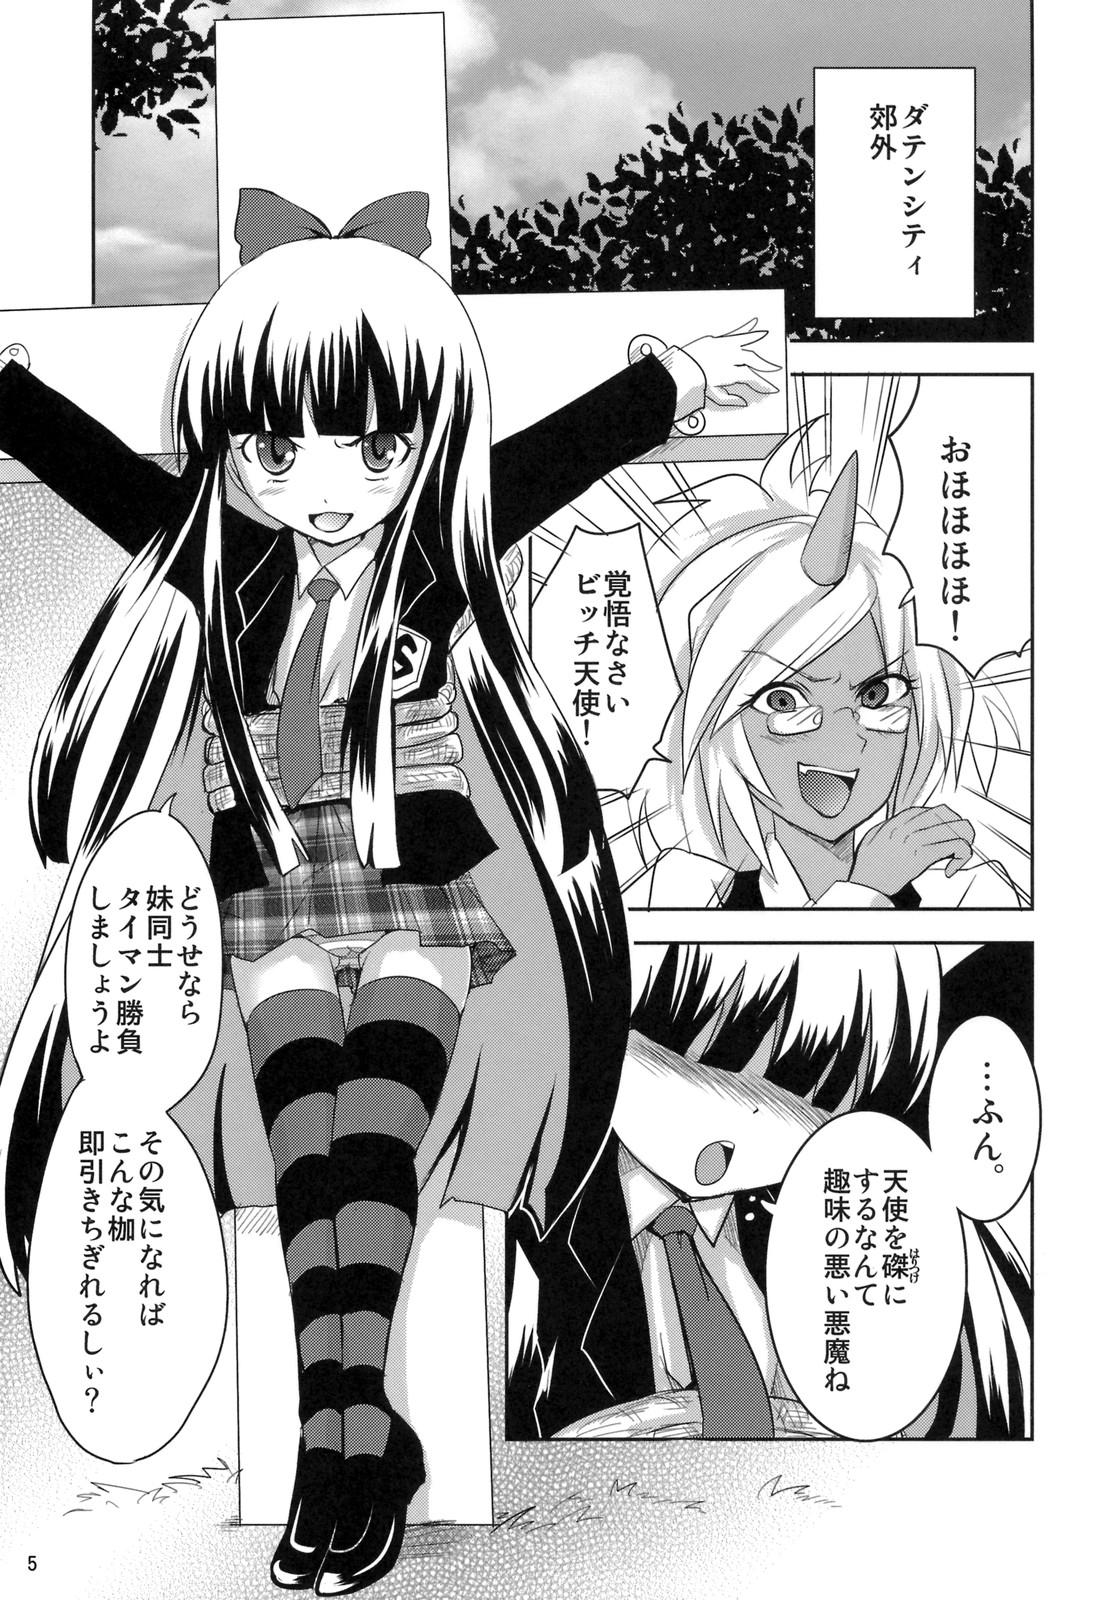 Horny Tenshi ga Love Kick wo - Panty and stocking with garterbelt Huge - Page 4